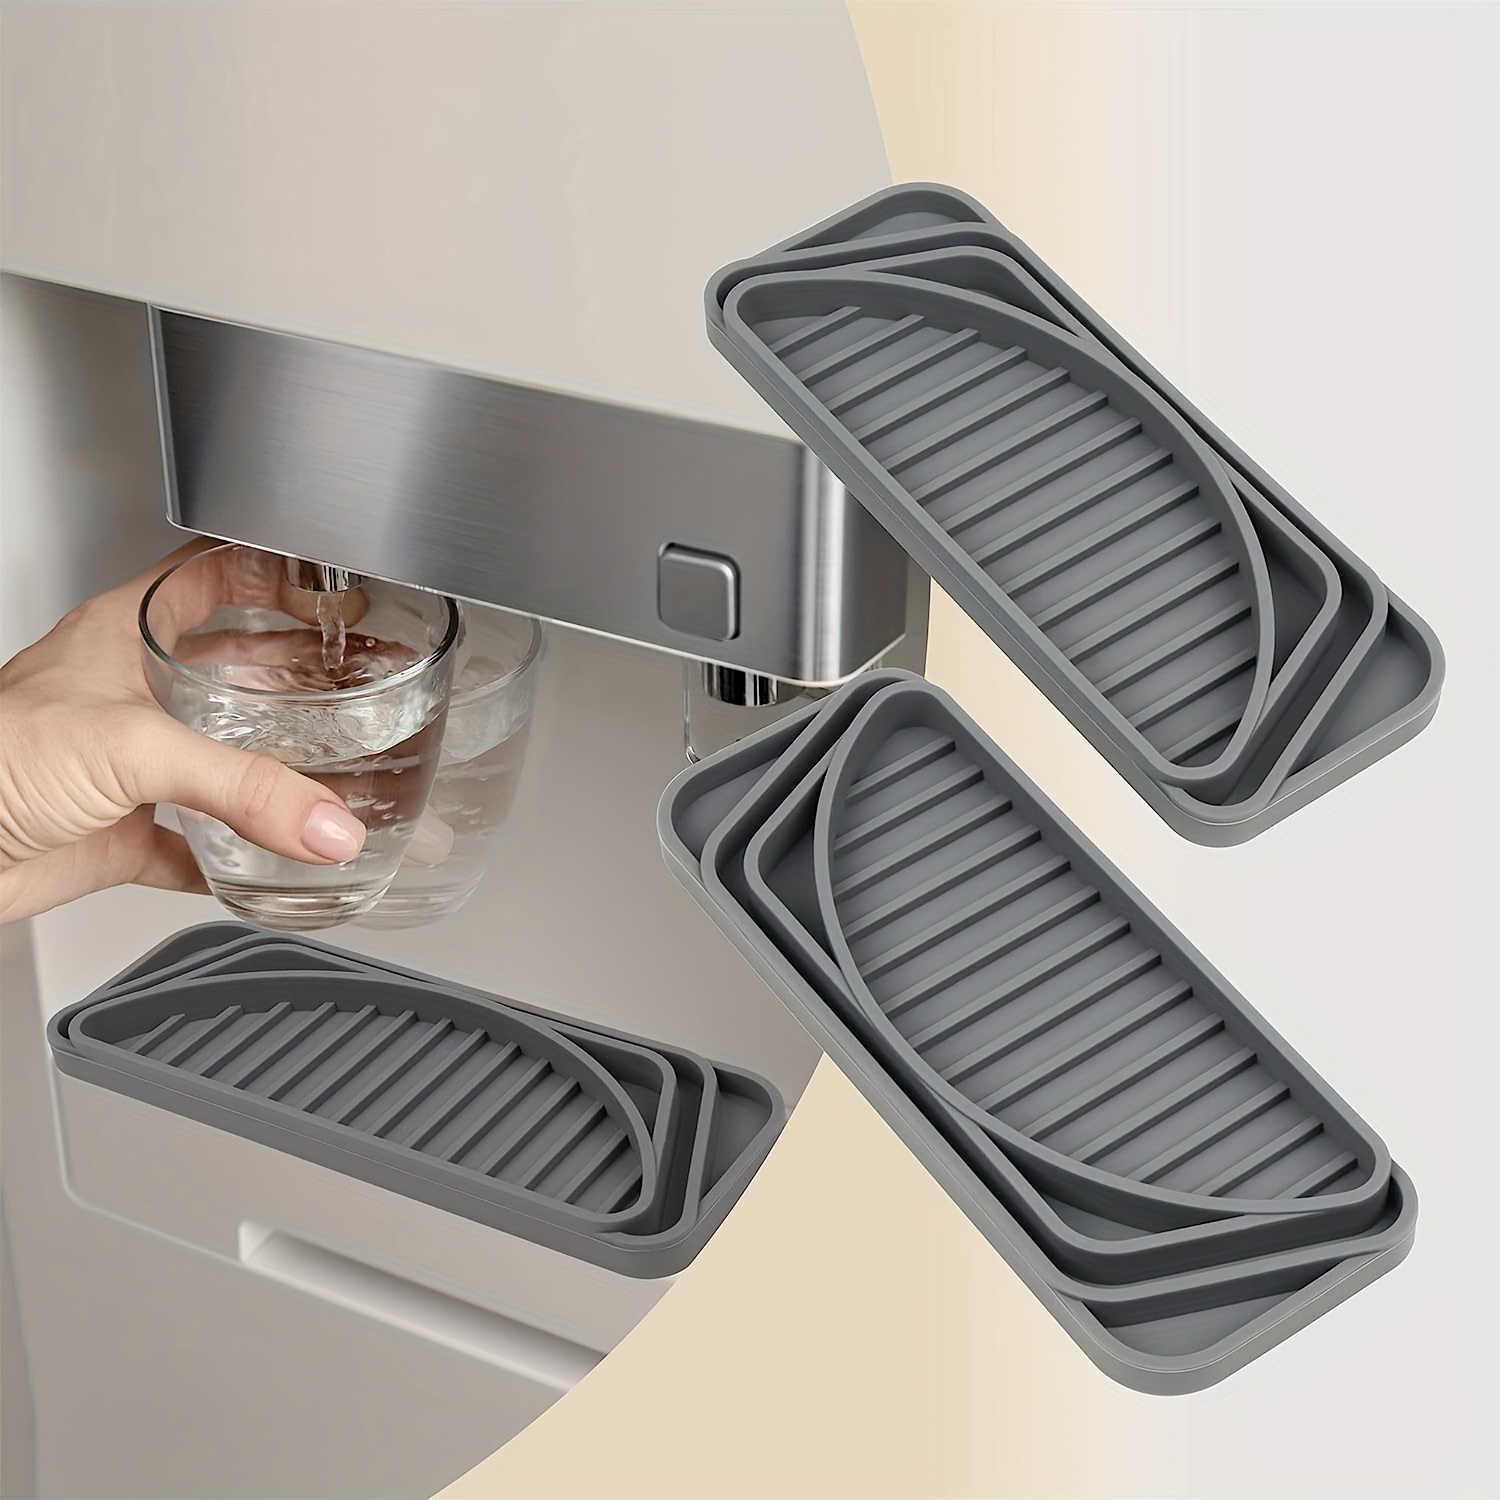 Generic iSH09-M416299mn Refrigerator Drip Catcher, Refrigerator Drip Tray  For Water Tray,Fridge Water Dispenser Drip Tray Prevents Water  Splashes,Non-s